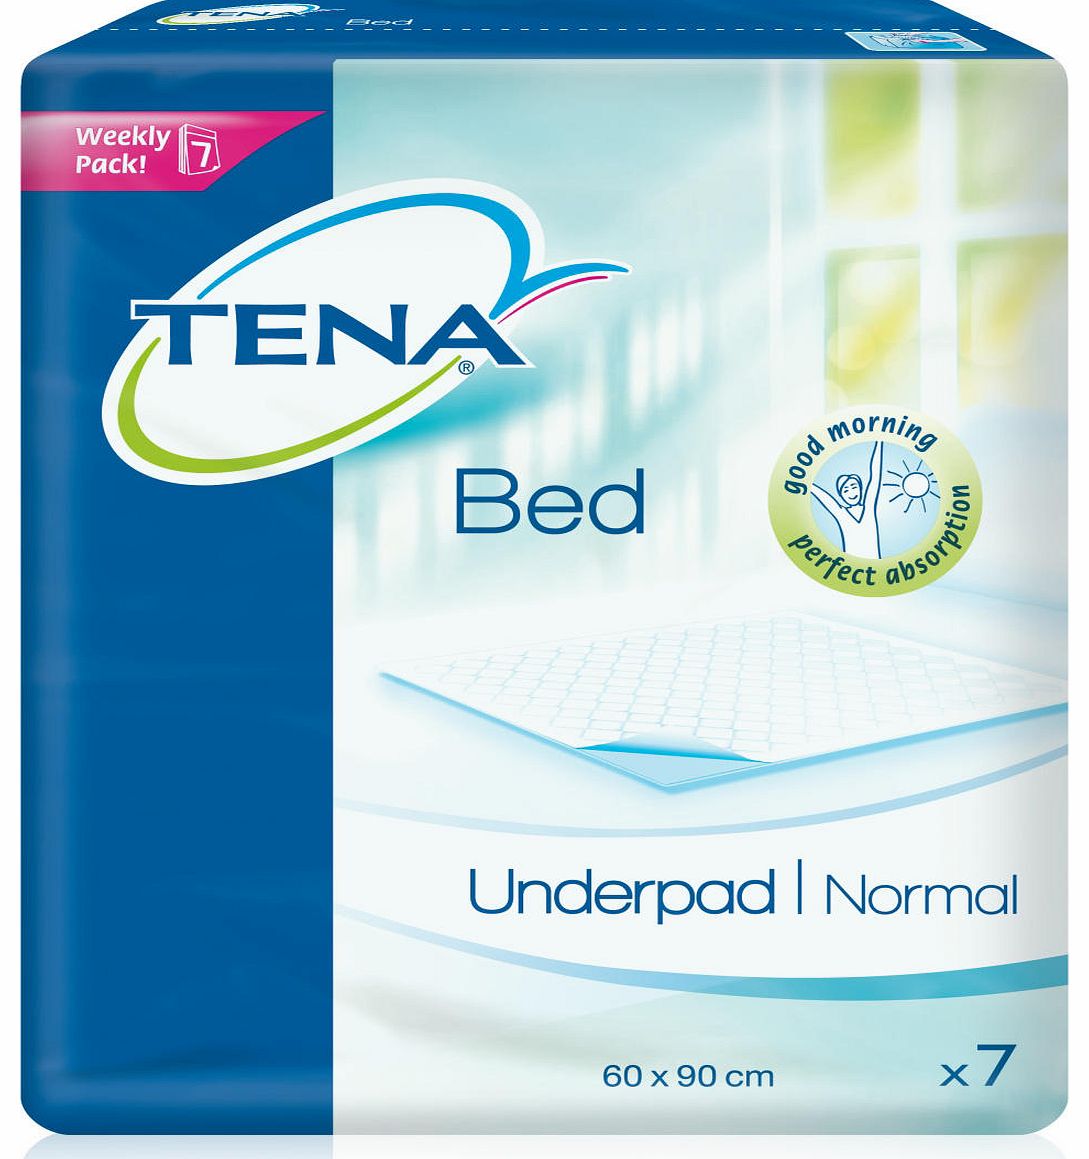 Tena Bed Underpad Weekly Pack